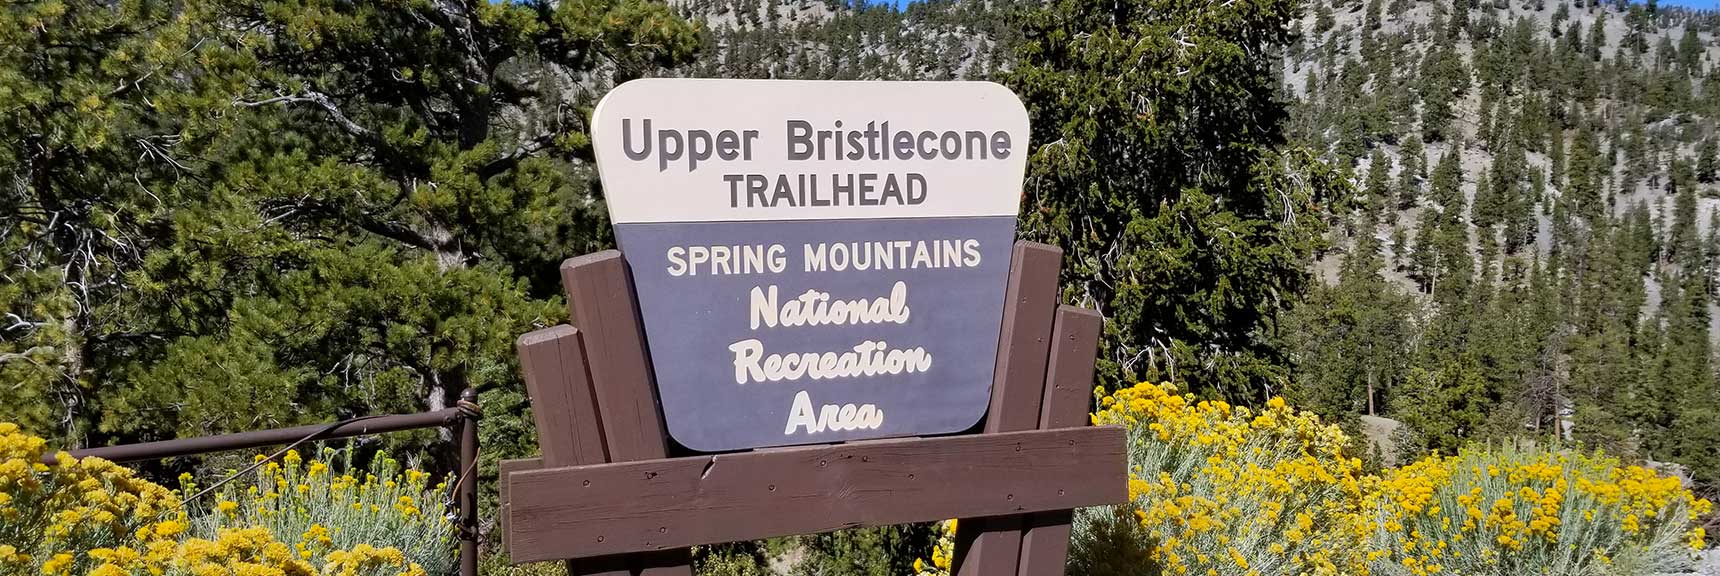 Bristlecone Pine Trail Trailhead in Lee Canyon, Mt. Charleston Wilderness, Nevada